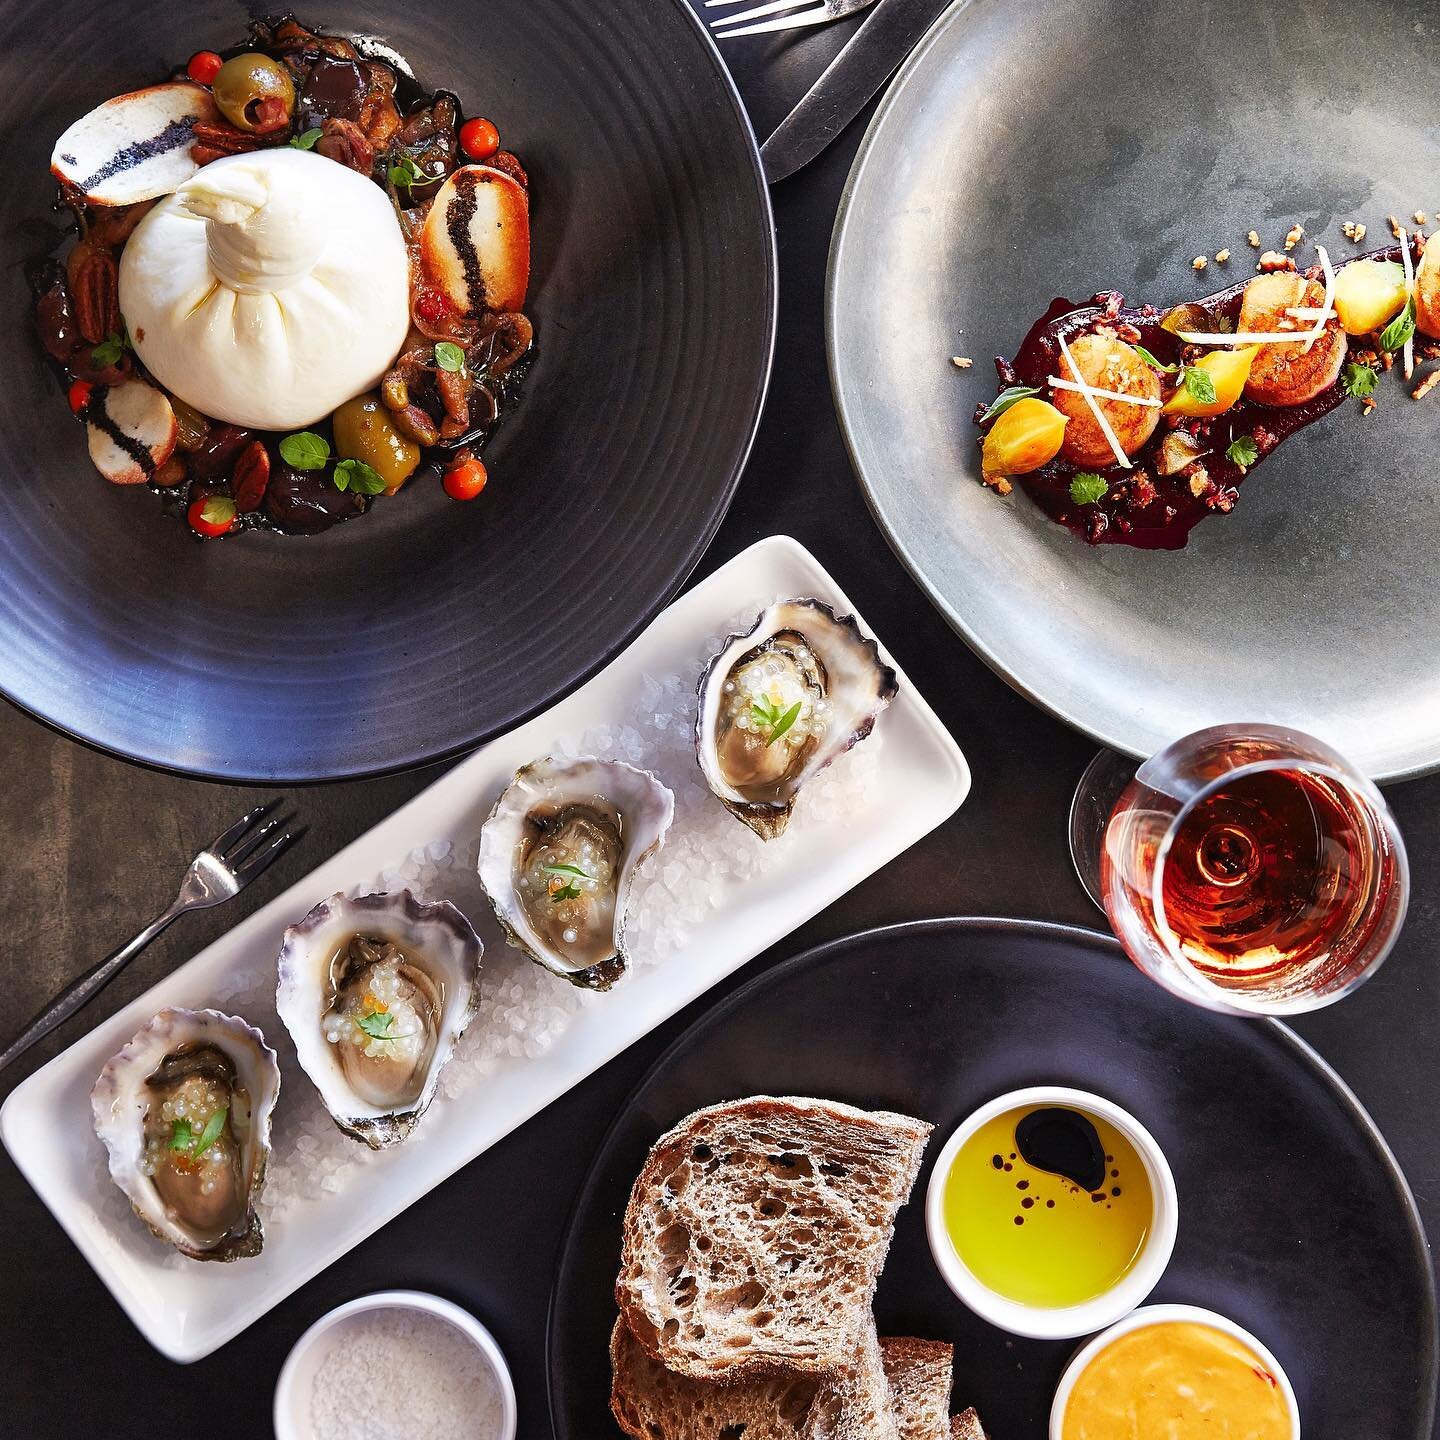 Good Food, Good Mood! 😉

#goodfood #harbourbridge #sydneyfood #sydneyrestaurants #localbusiness